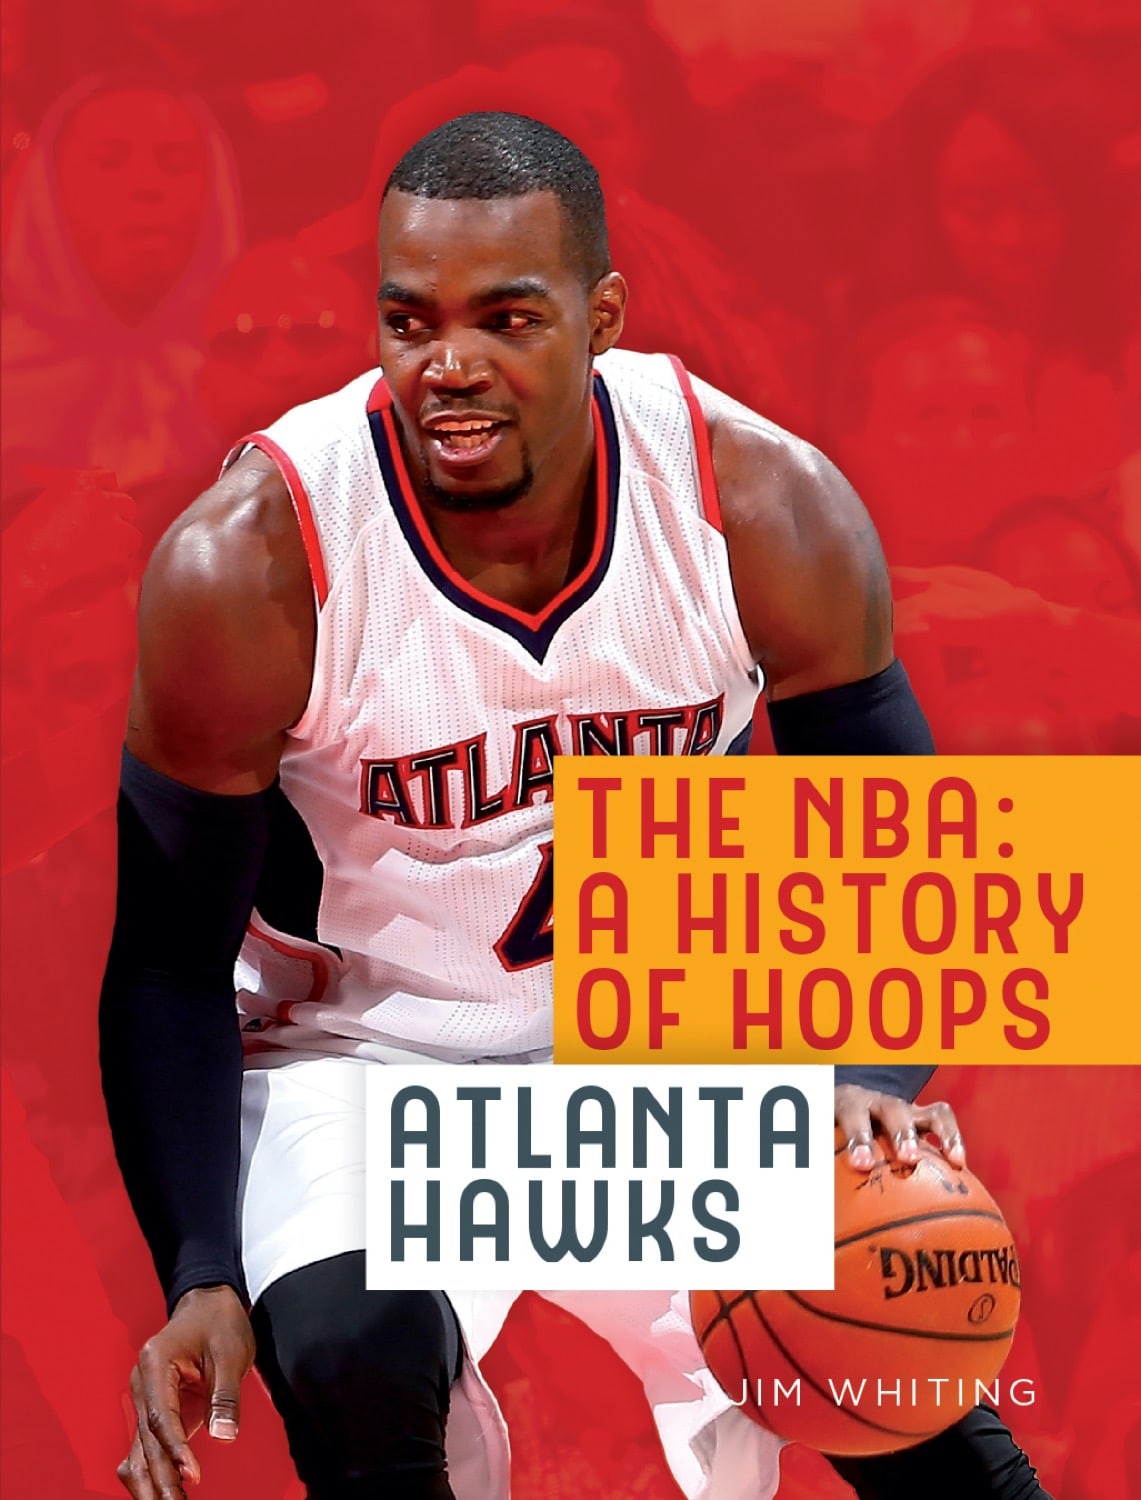 The NBA: A History of Hoops: Atlanta Hawks